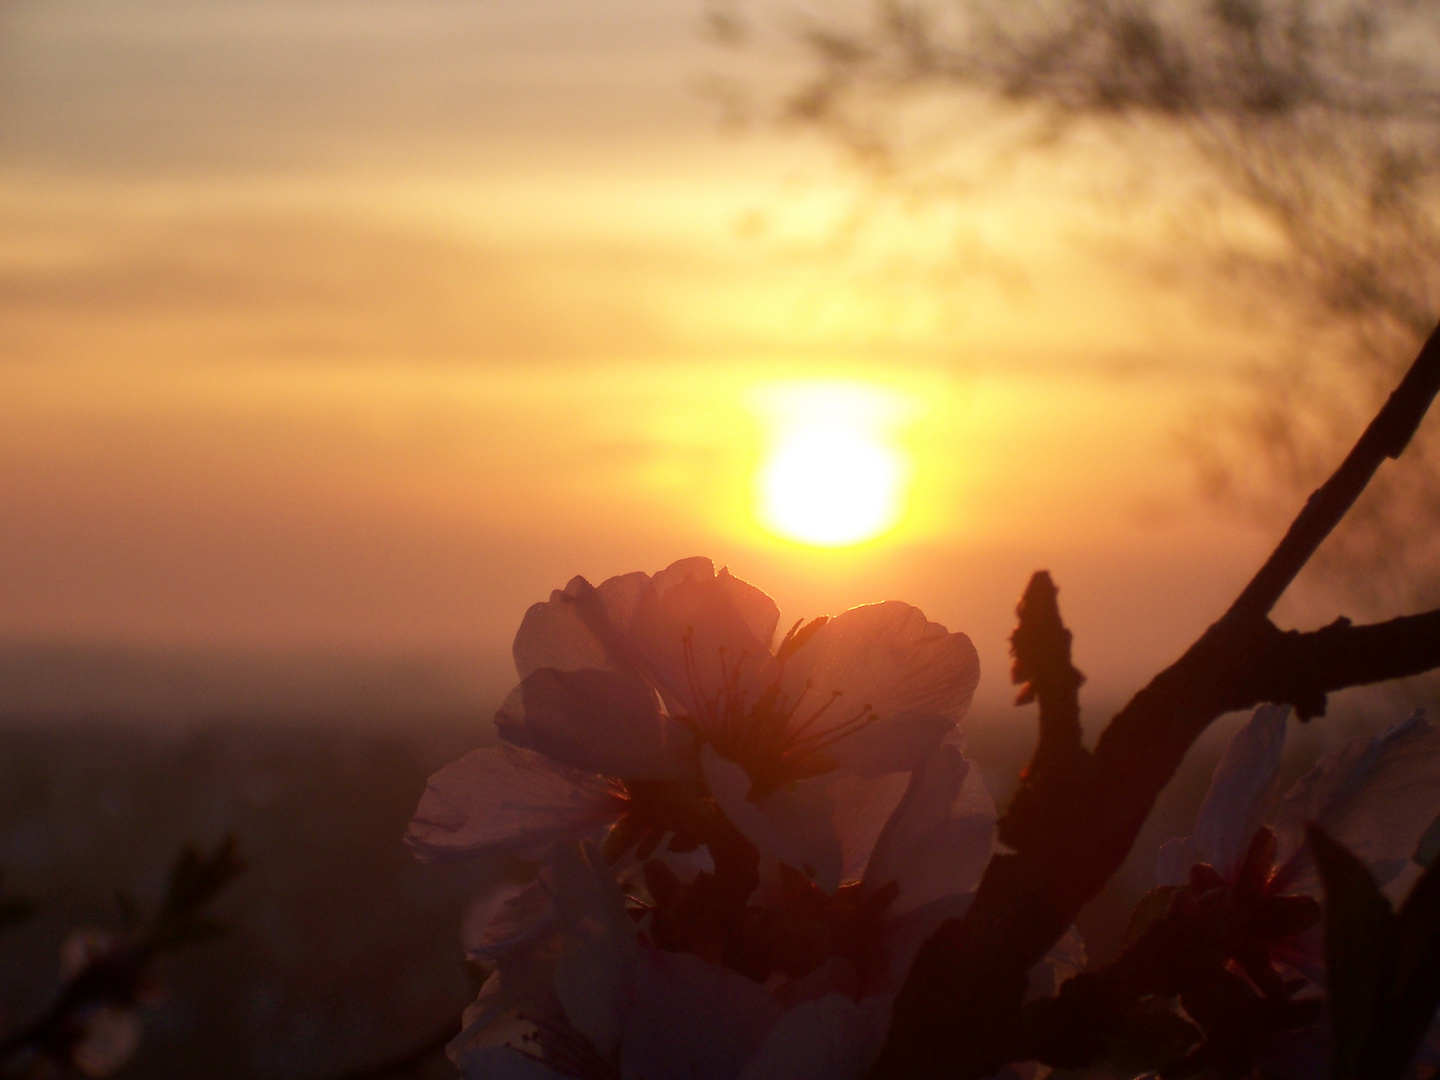 Zarte Mandelblüte im Sonnenaufgang